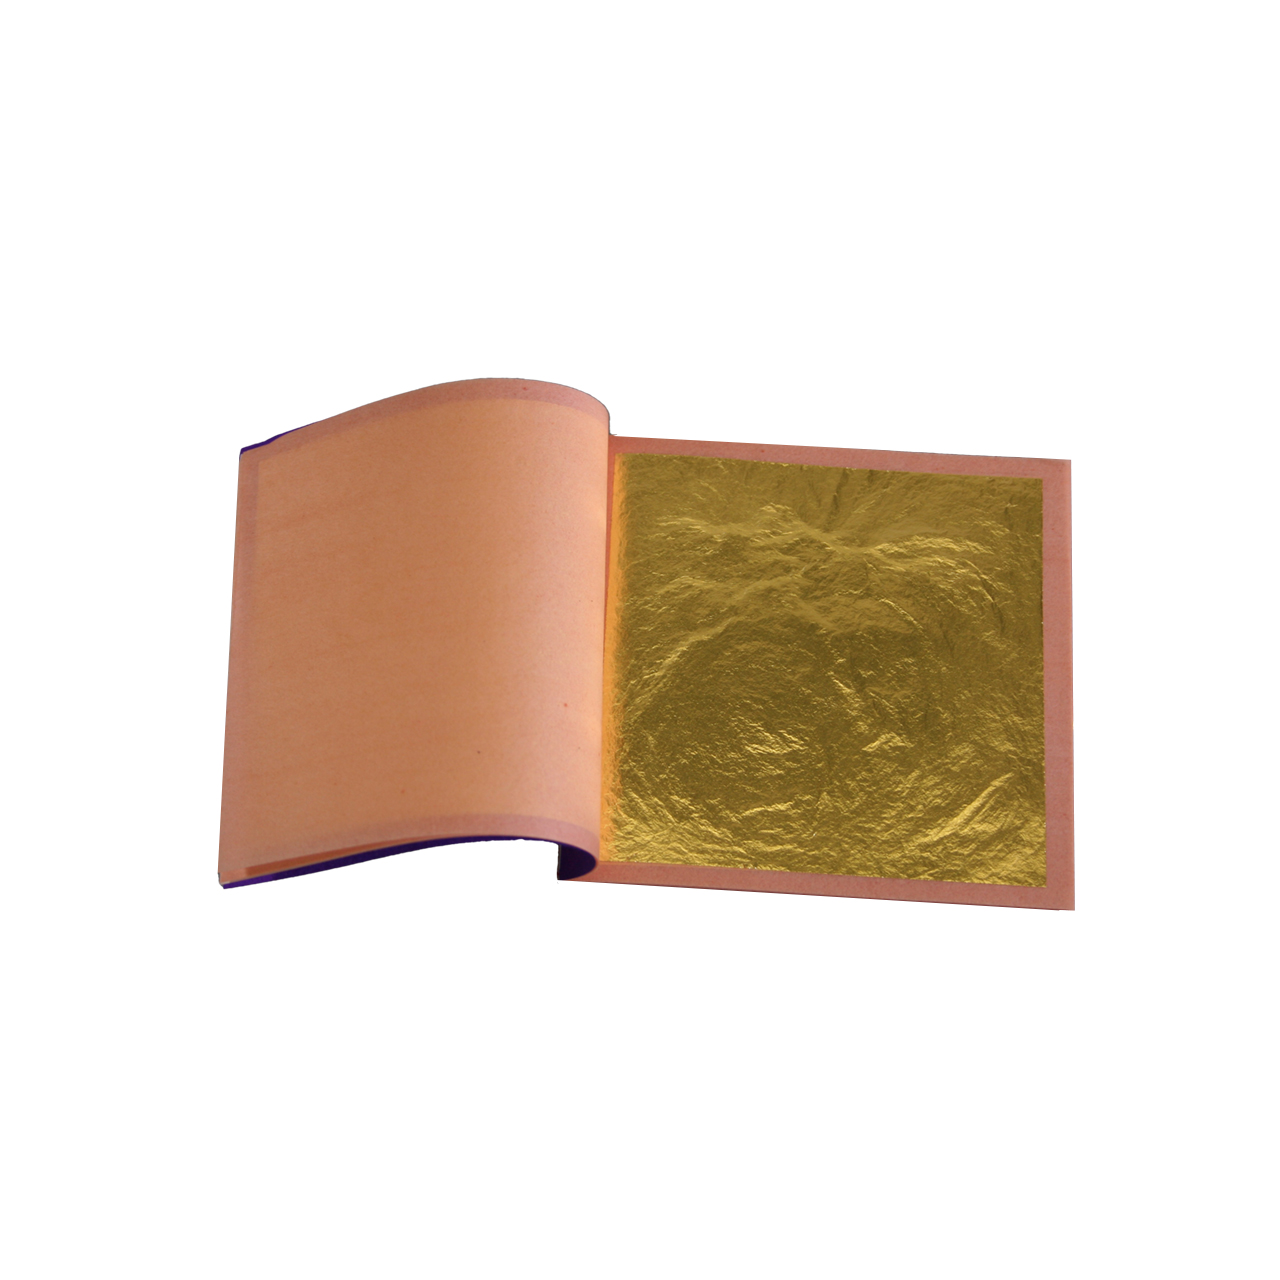 Gold leaf, 22 carat, 80 x 80 mm